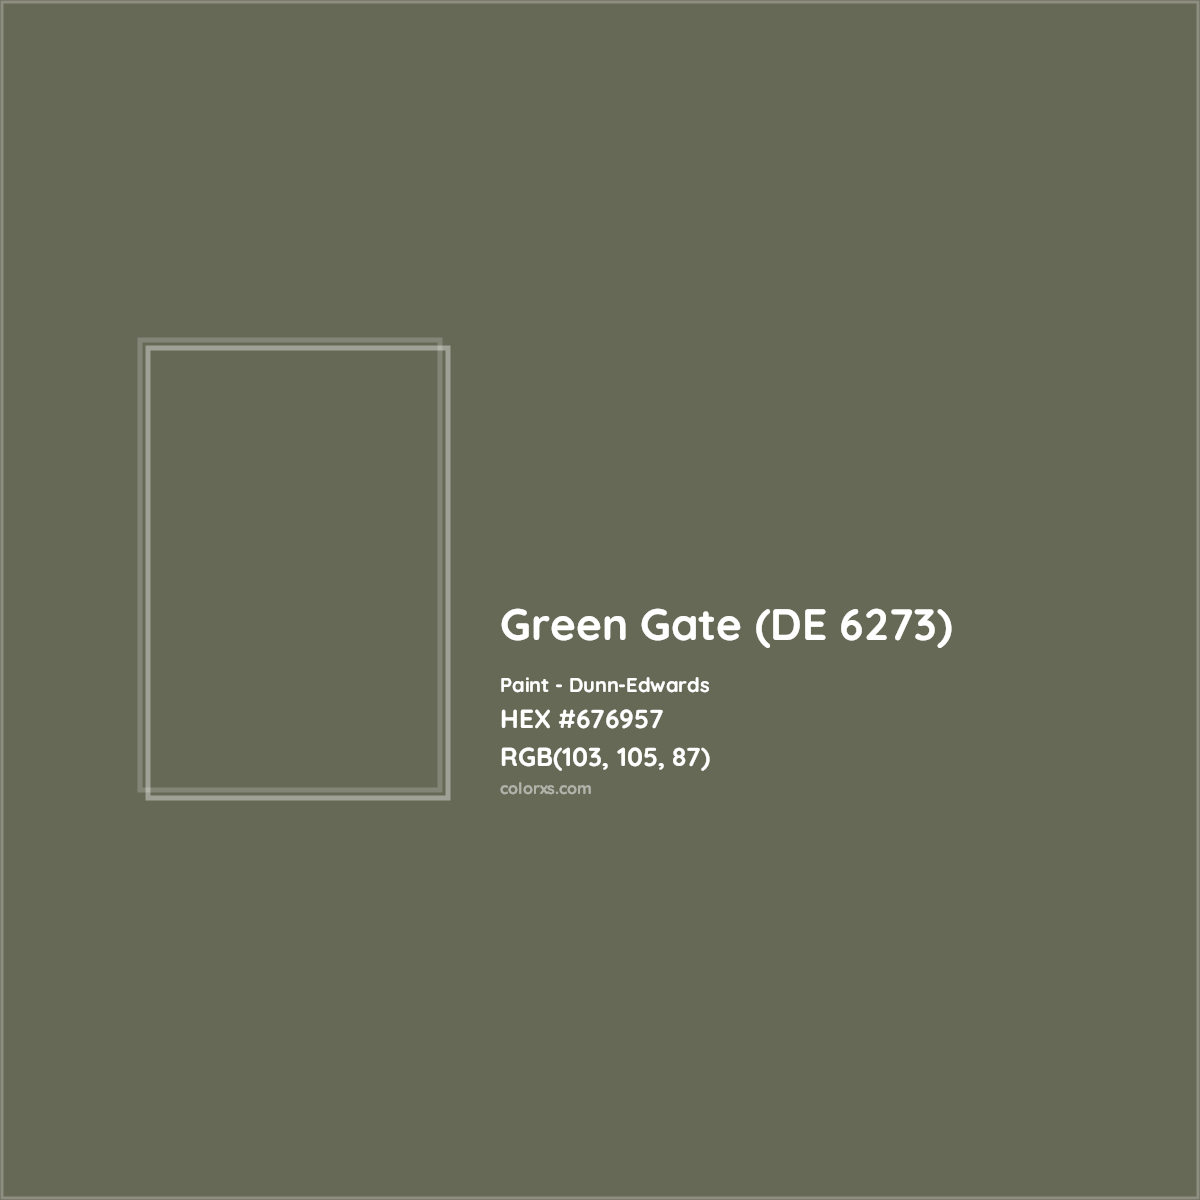 HEX #676957 Green Gate (DE 6273) Paint Dunn-Edwards - Color Code